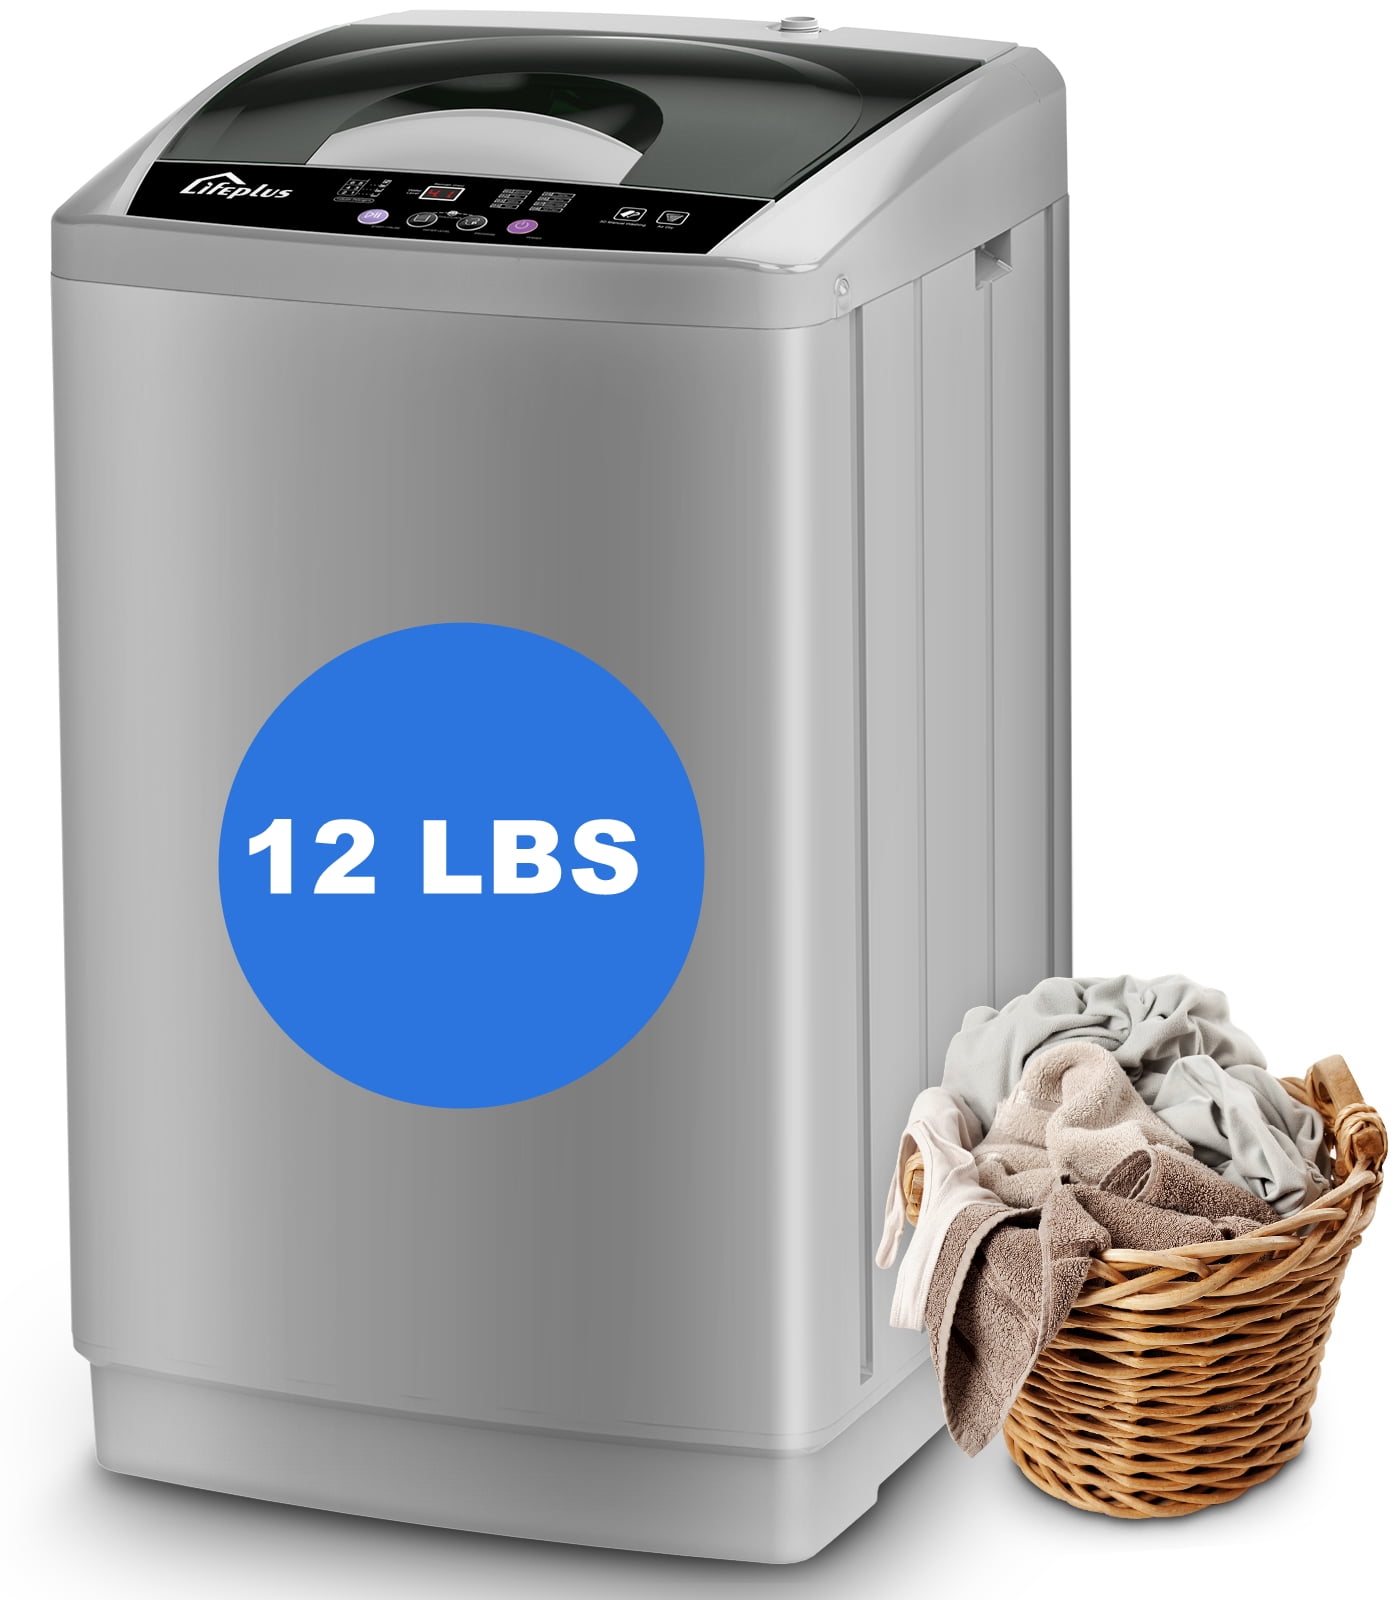 LifePlus Full Automatic Portable Washing Machine 1.8 Cu.ft, 12 lbs